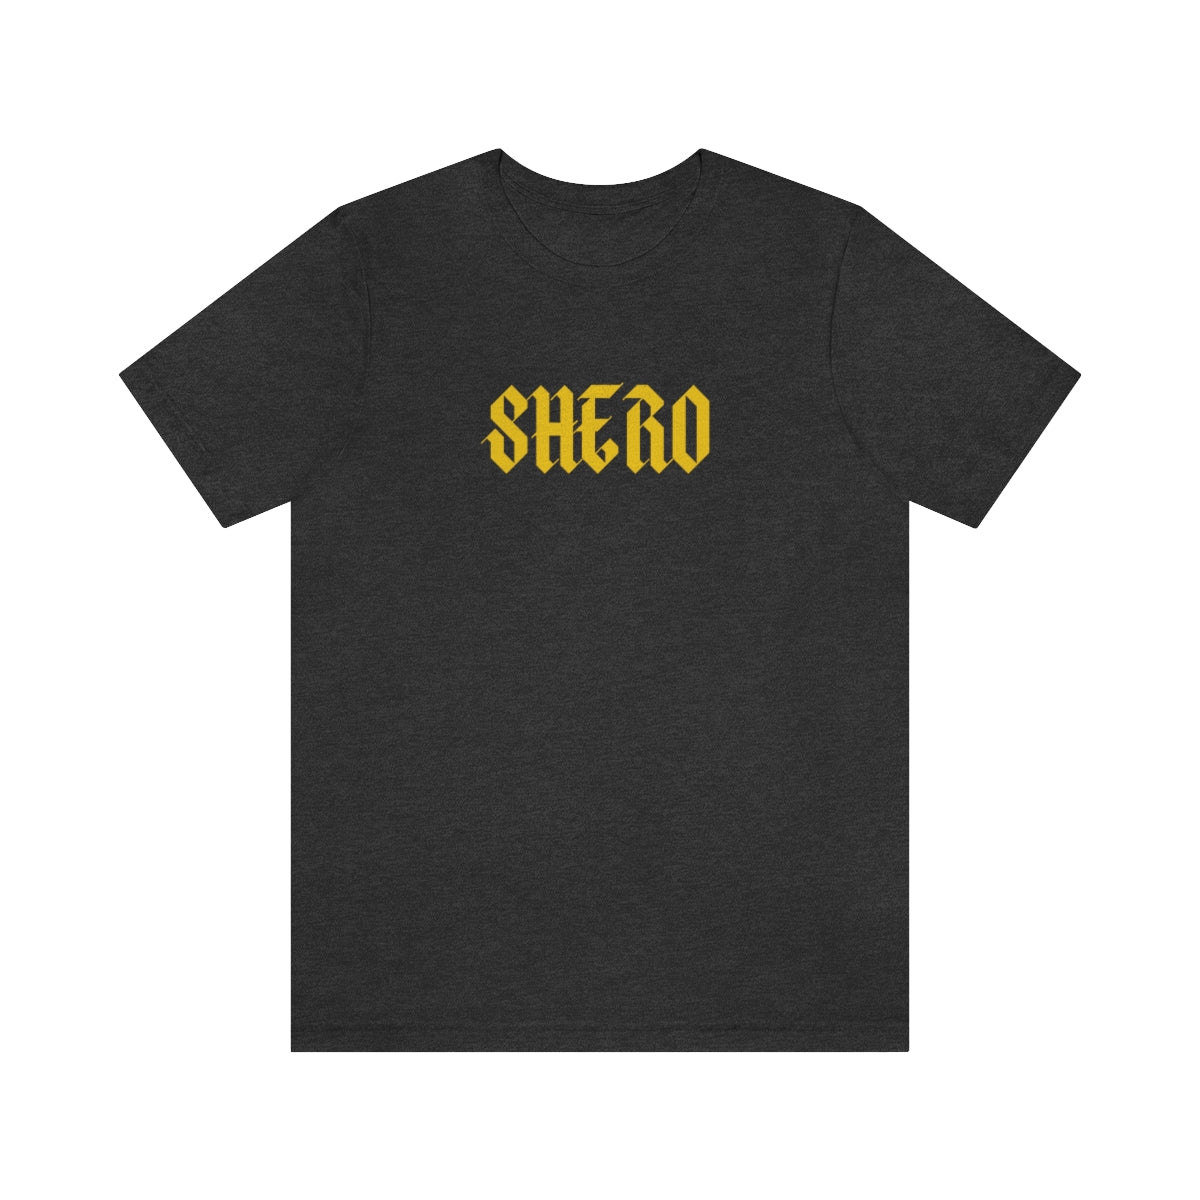 SHERO She is a Hero T Shirt Women Heros Women Leaders Graphic | Unisex Jersey Short Sleeve Tee